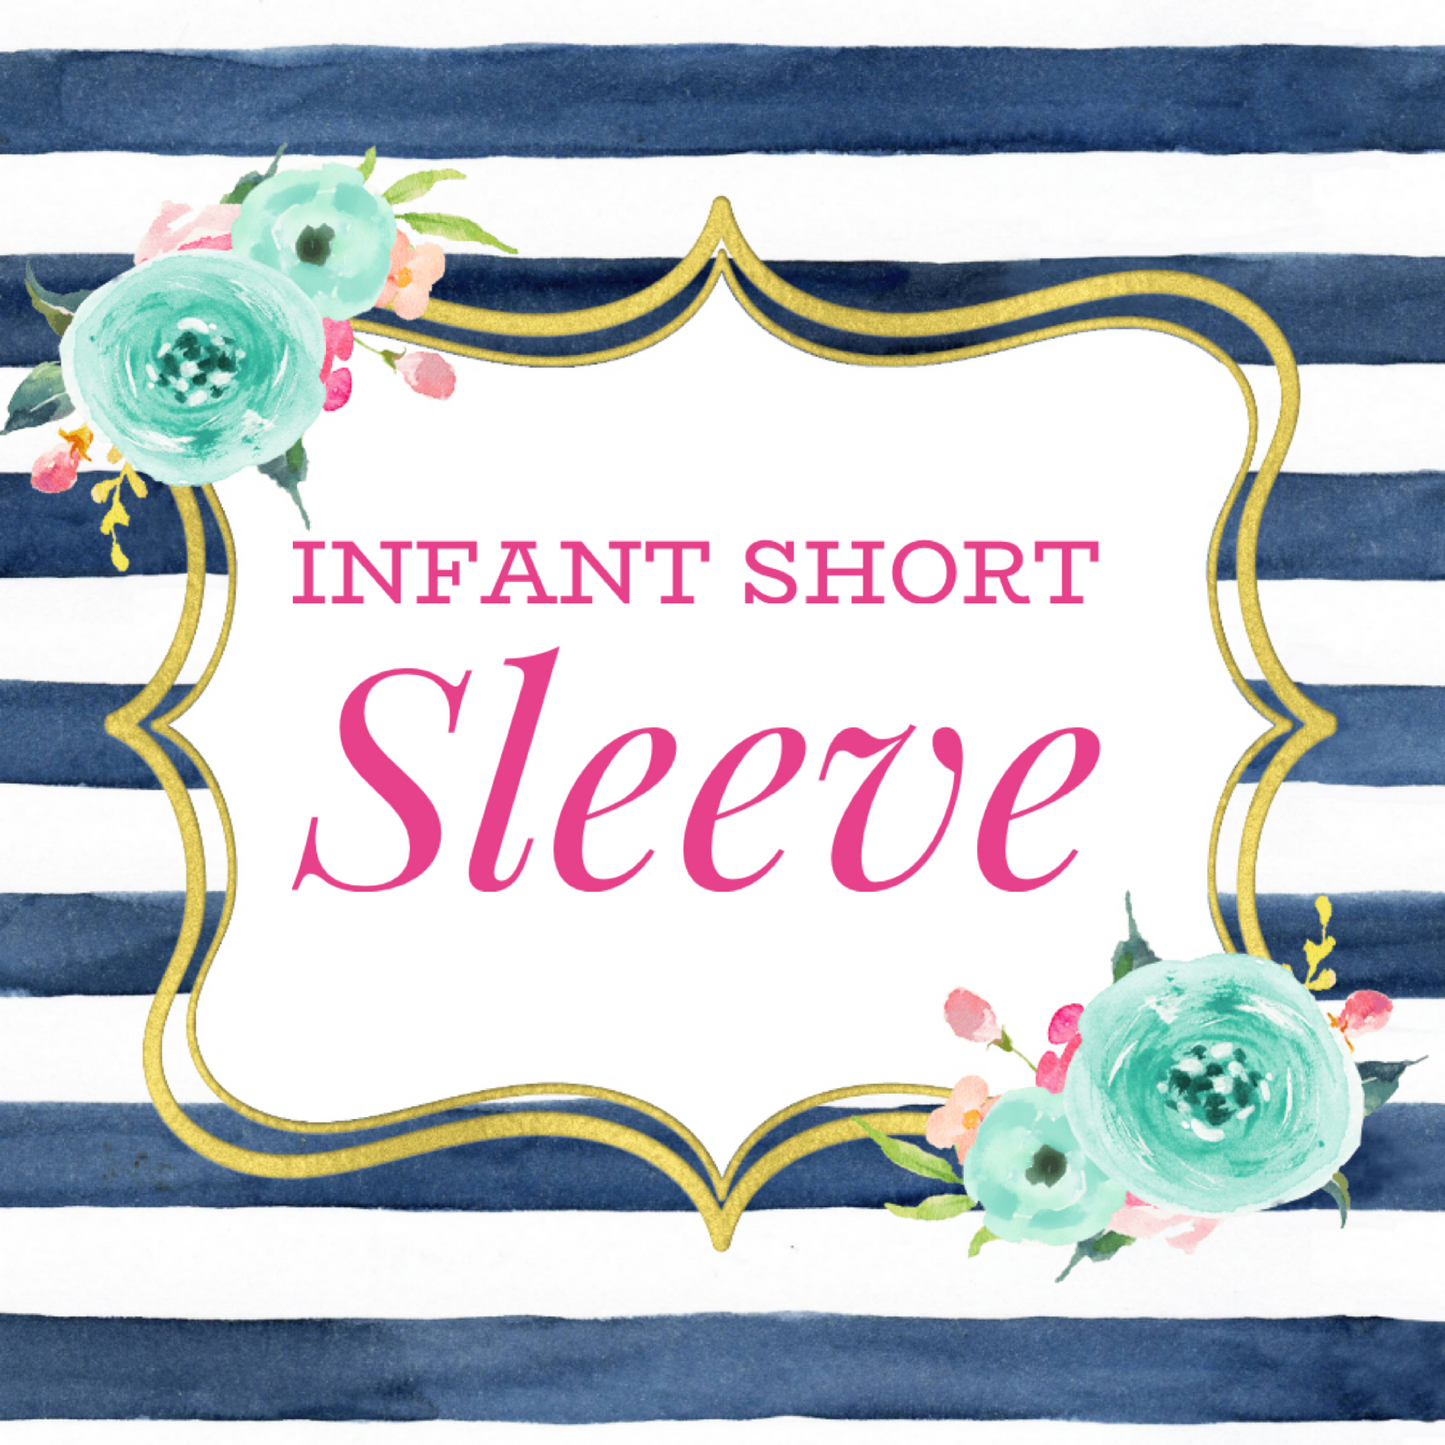 Infant Short Sleeve (One Color) - $18